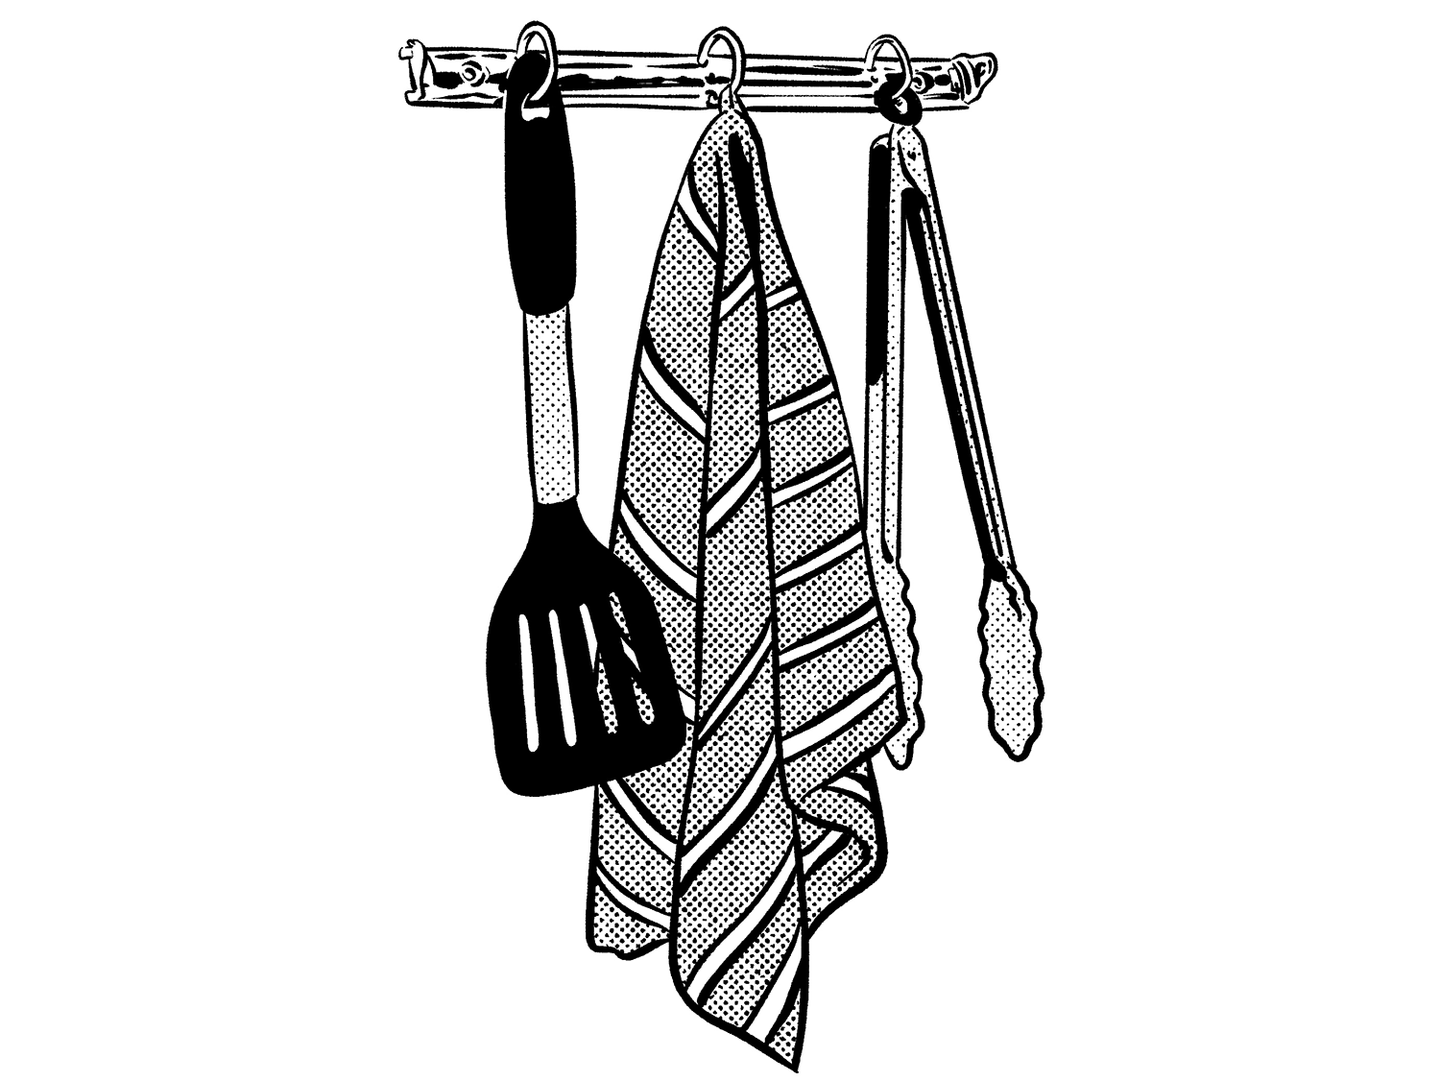 An illustration of kitchen utensils hanging on a rack.